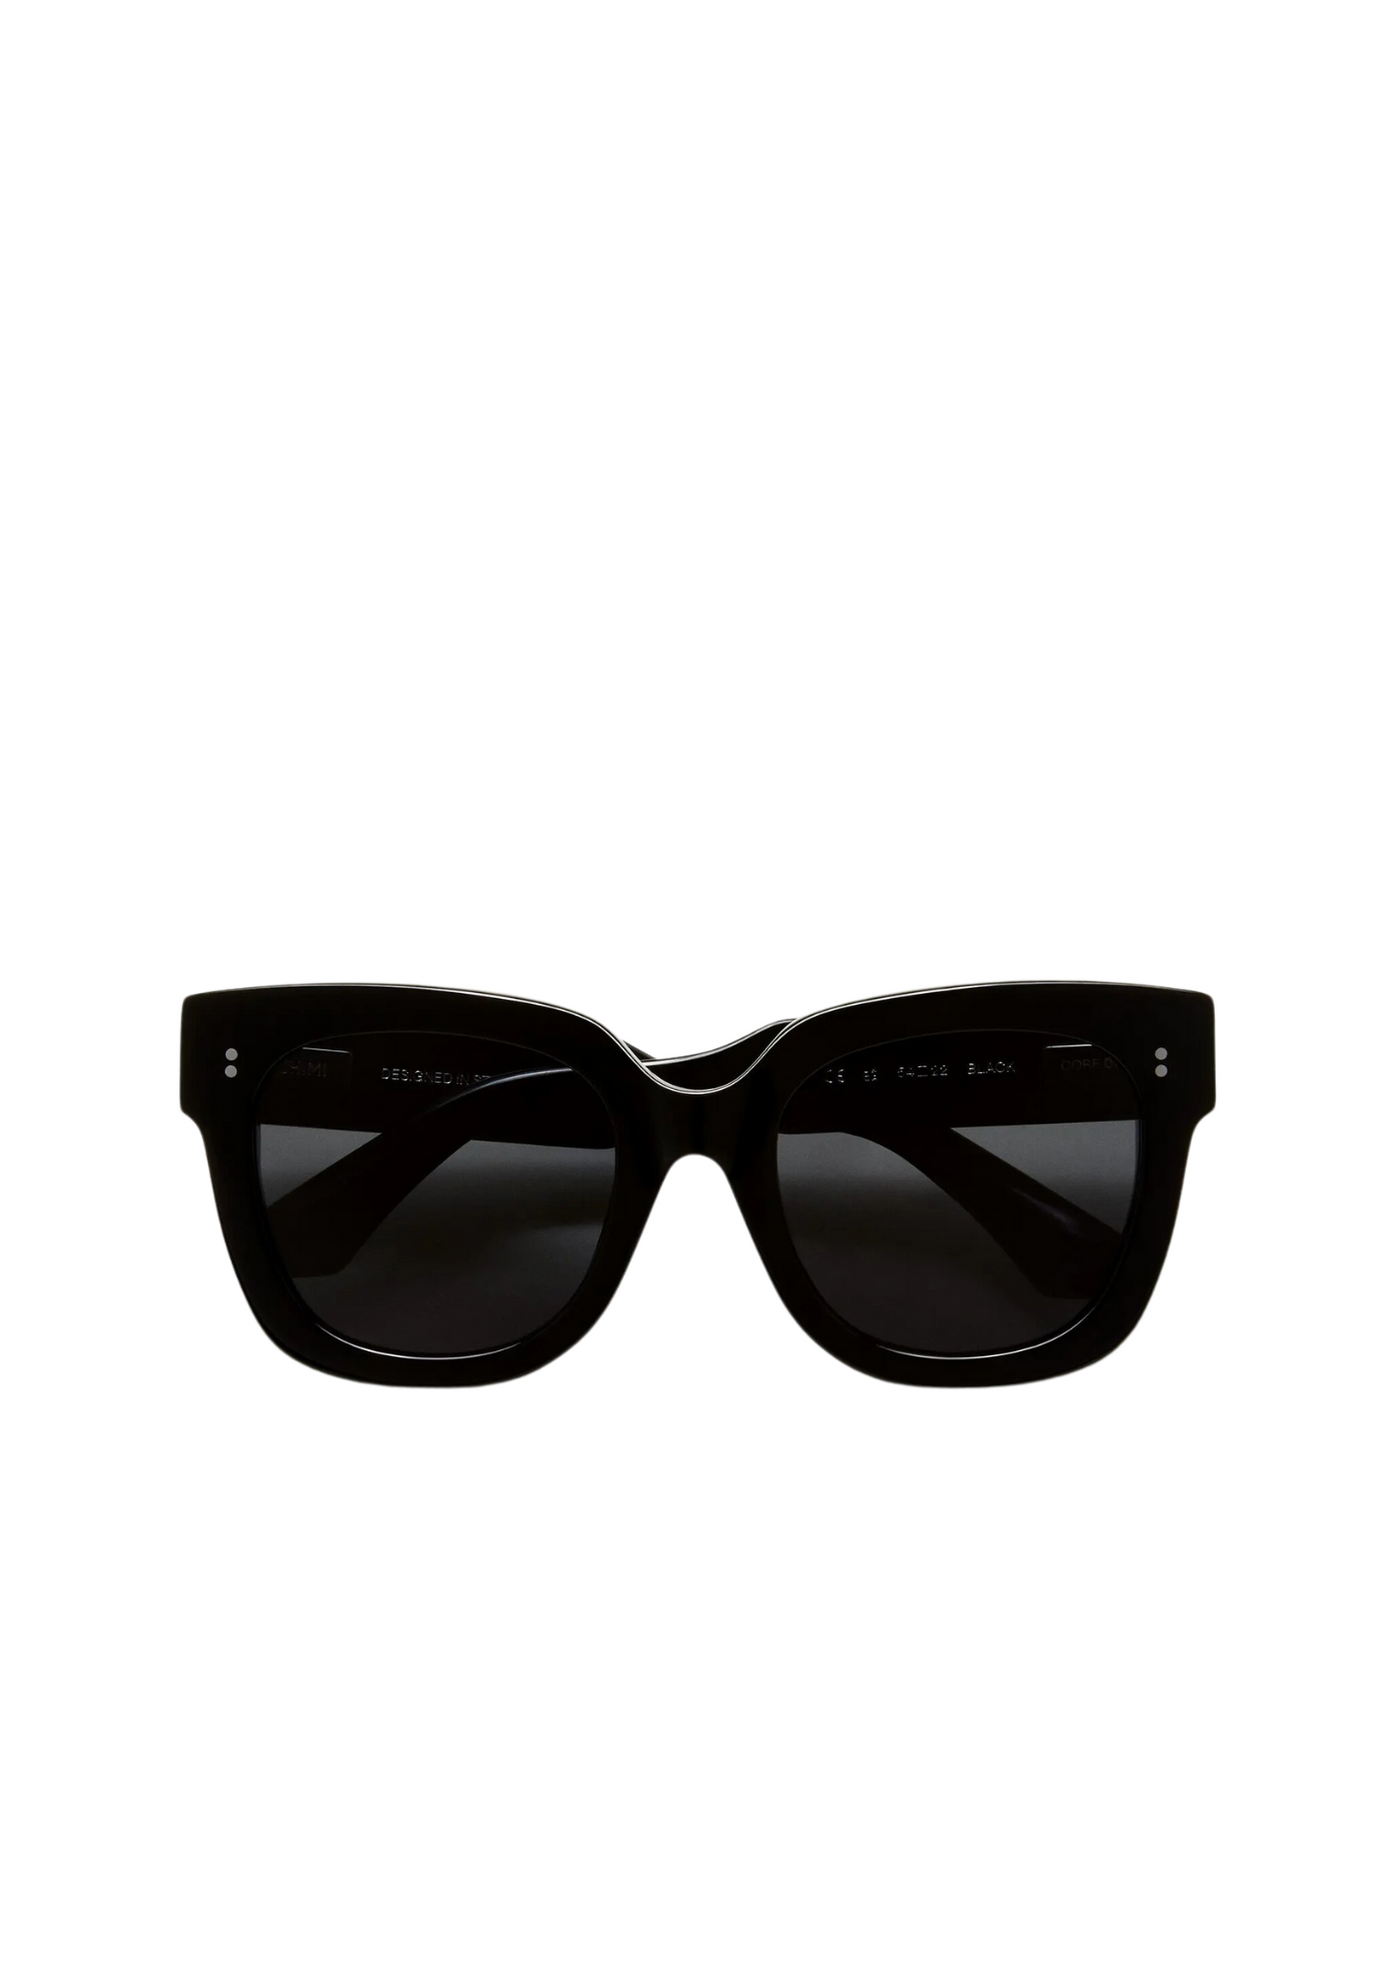 CHIMI | Sunglasses 08.2M Black